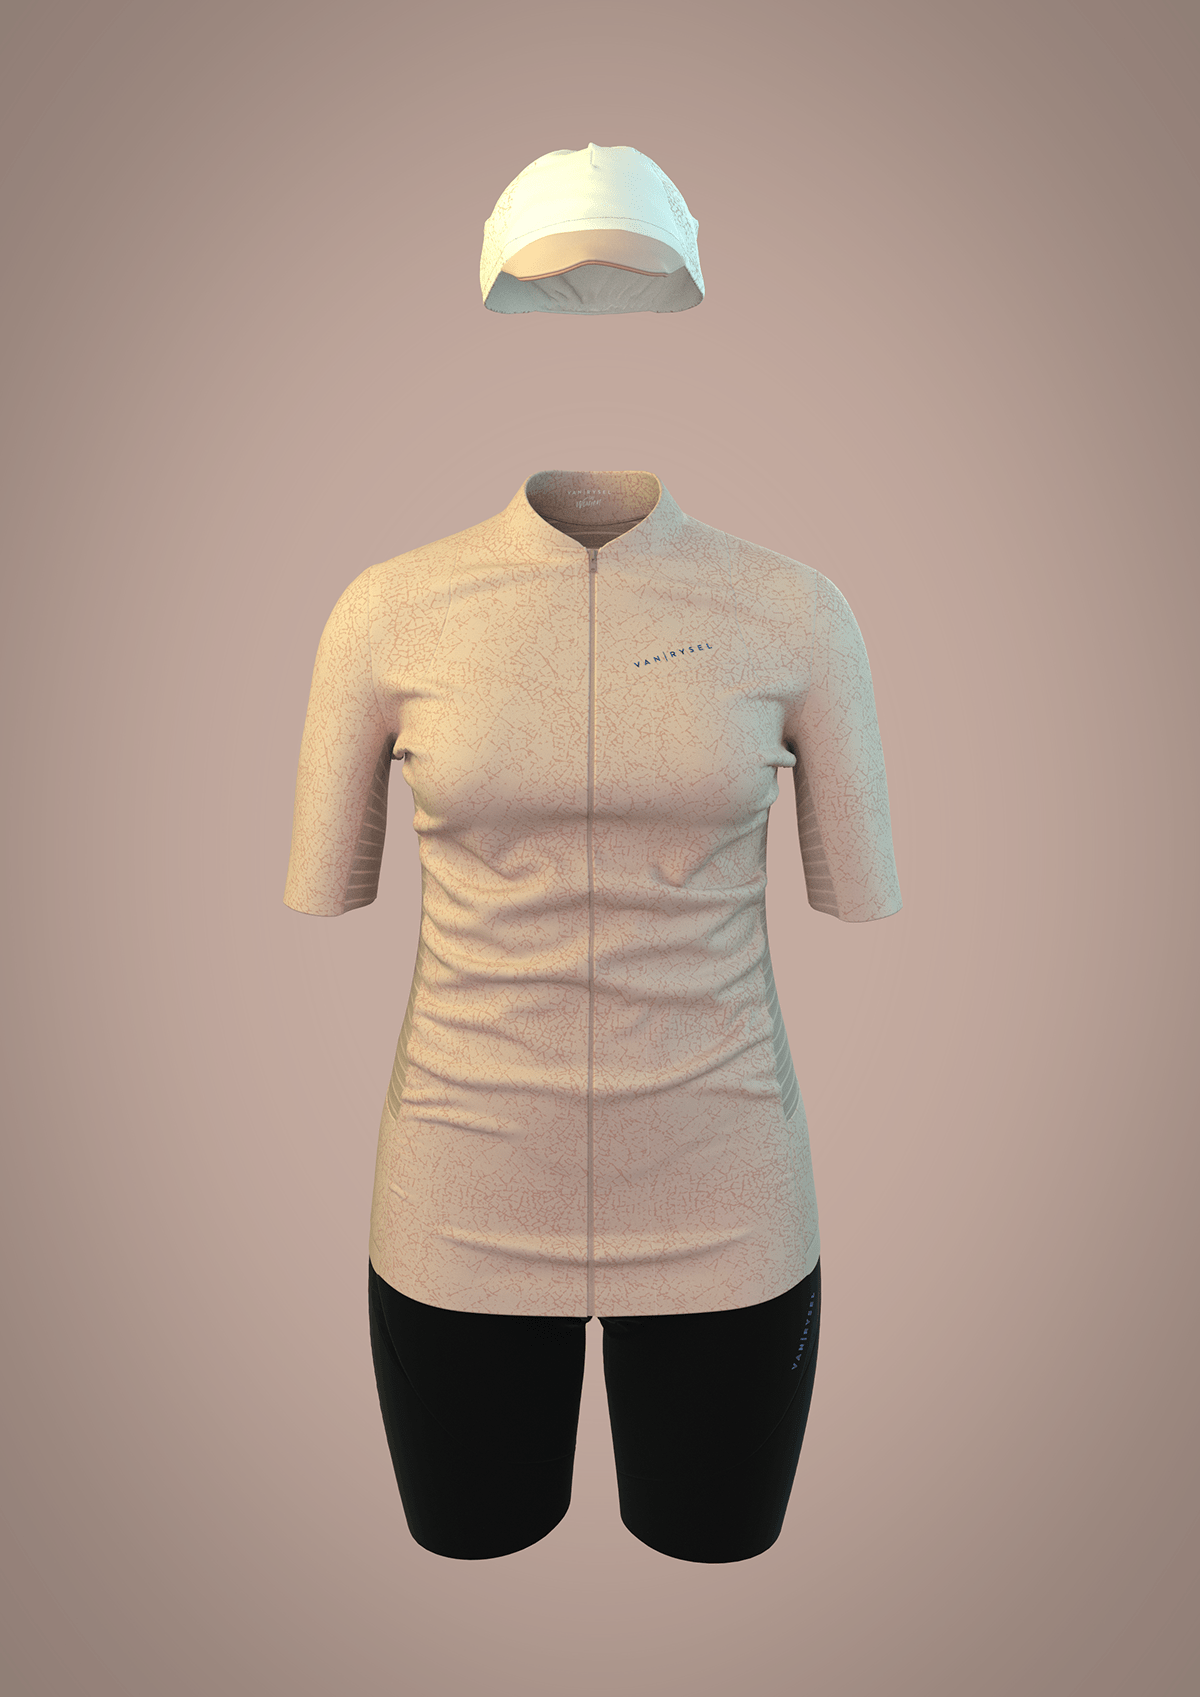 apparel Clo3d Clothing cycling jersey cyclingkit virtual fashion womenswear